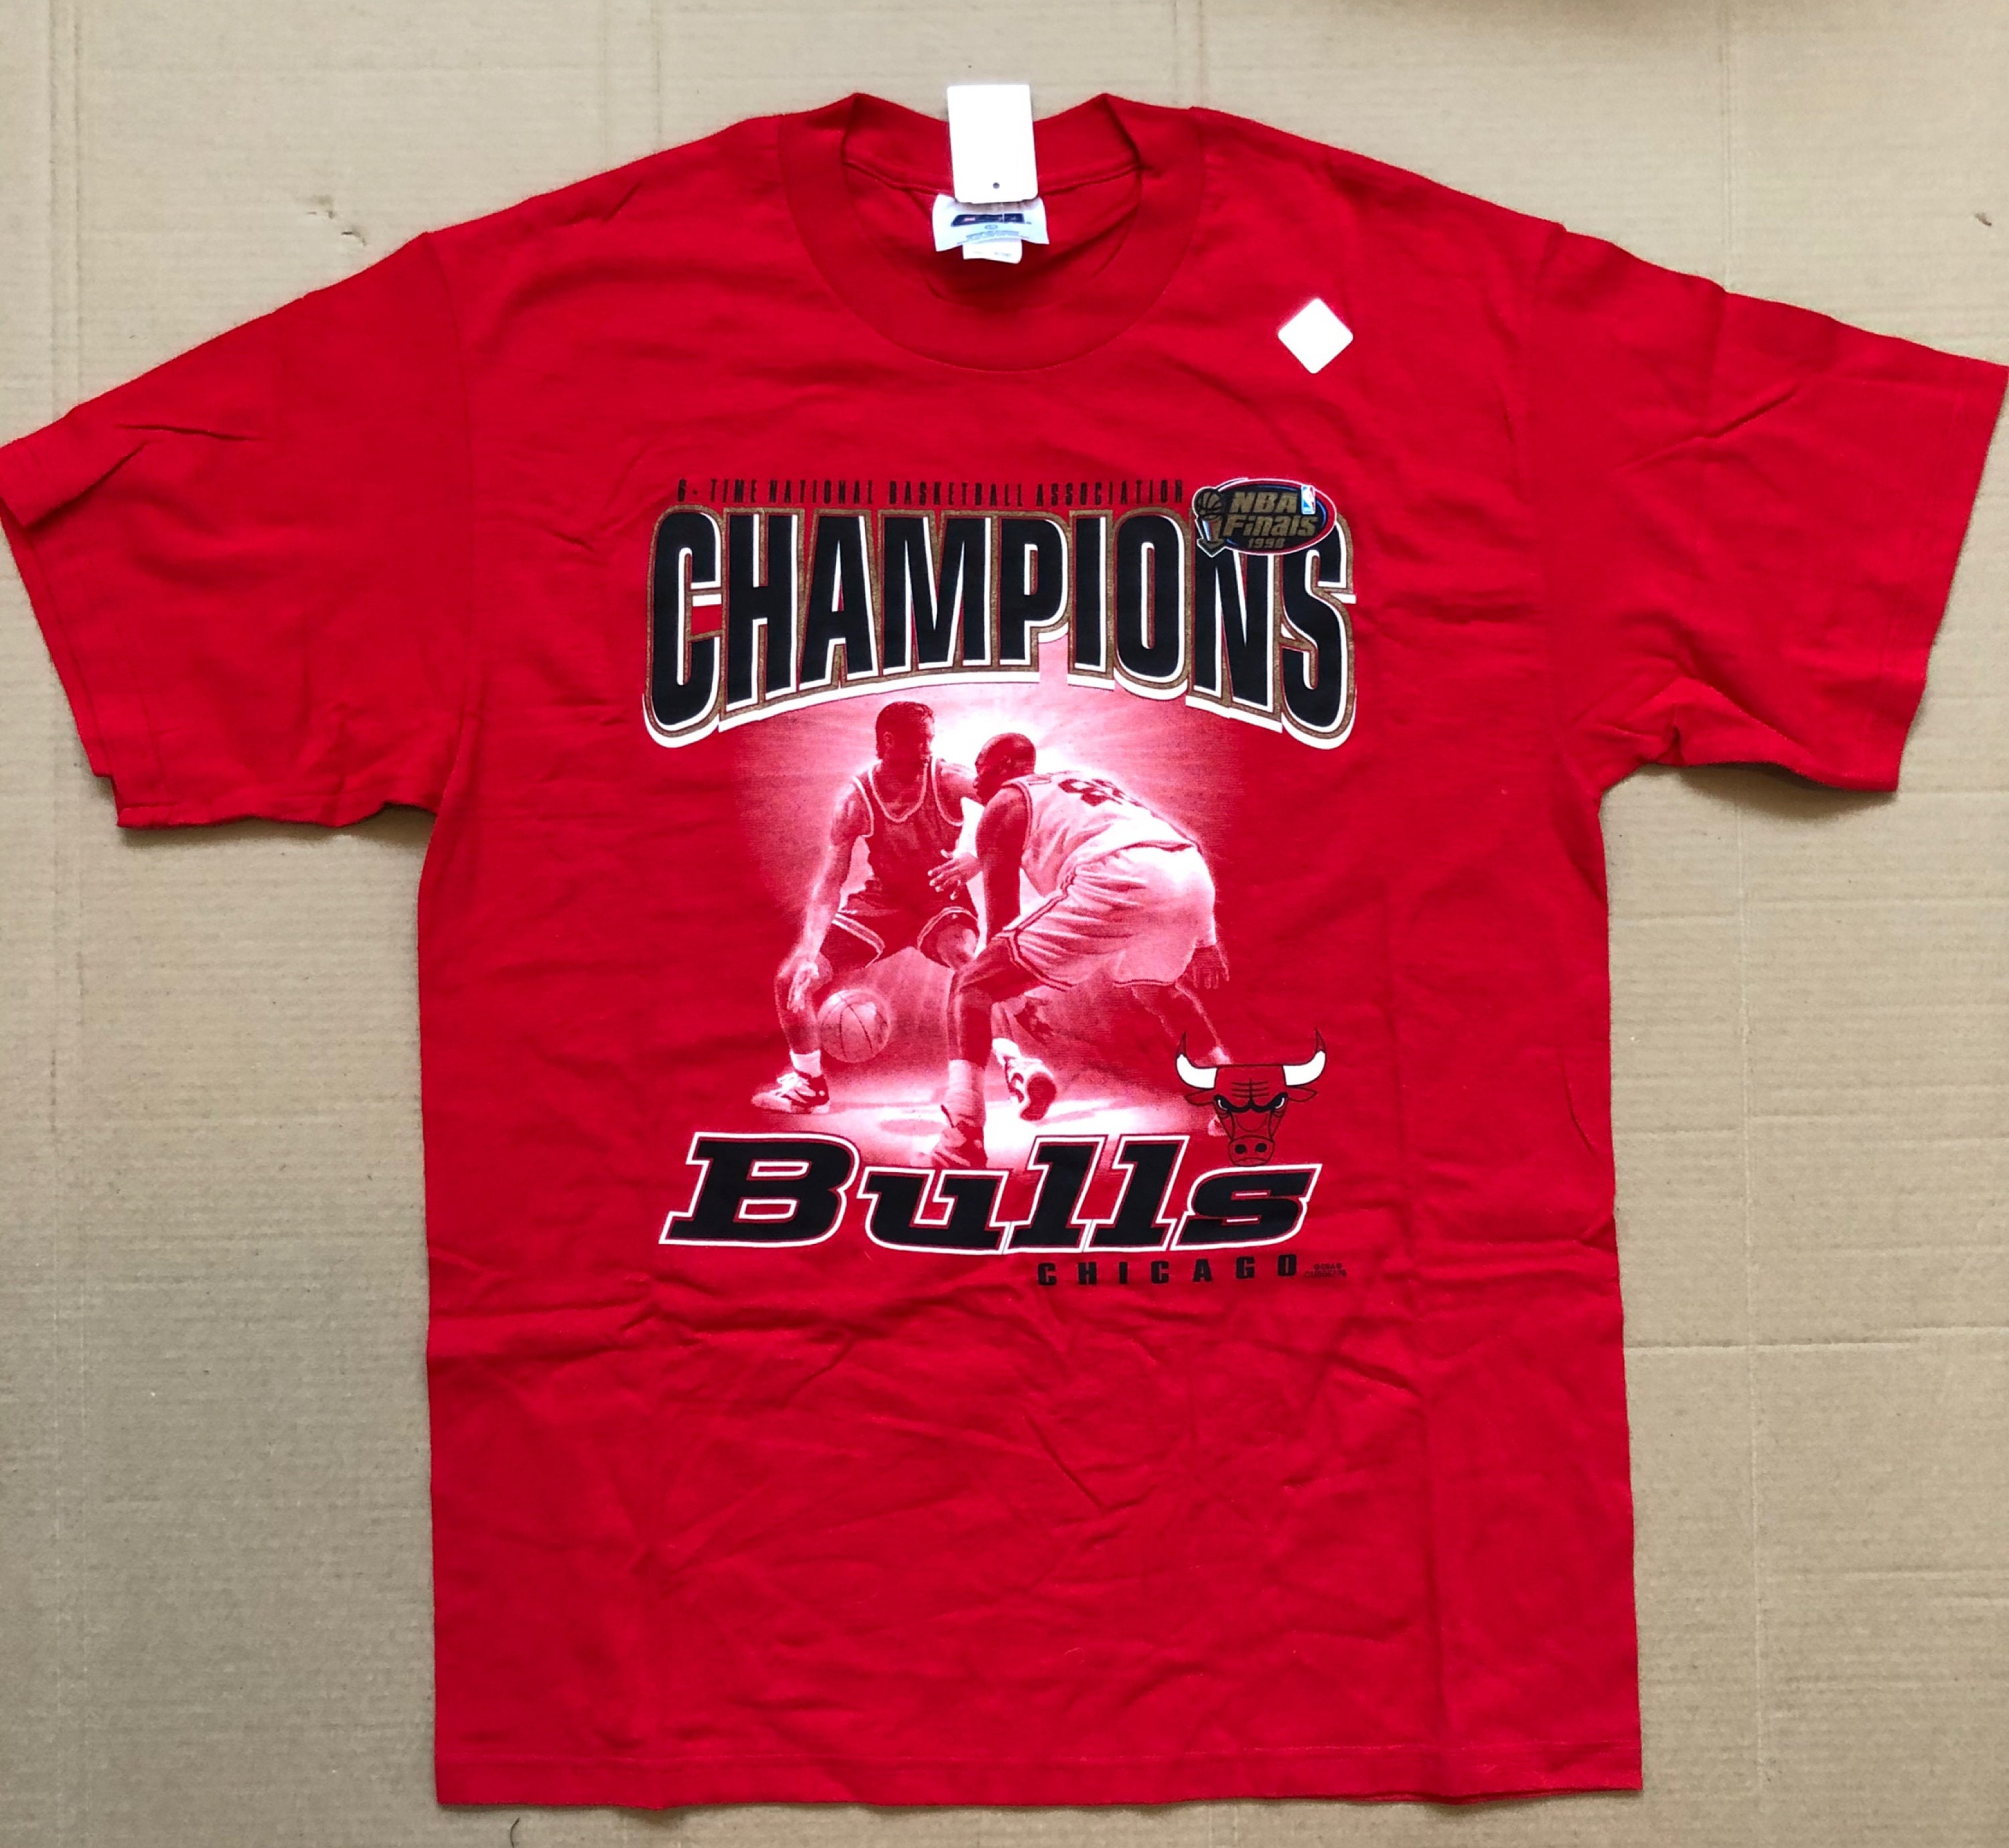 CHICAGO BULLS 1998 SIX TIME NBA CHAMPION BOOTLEG SHIRT (Black